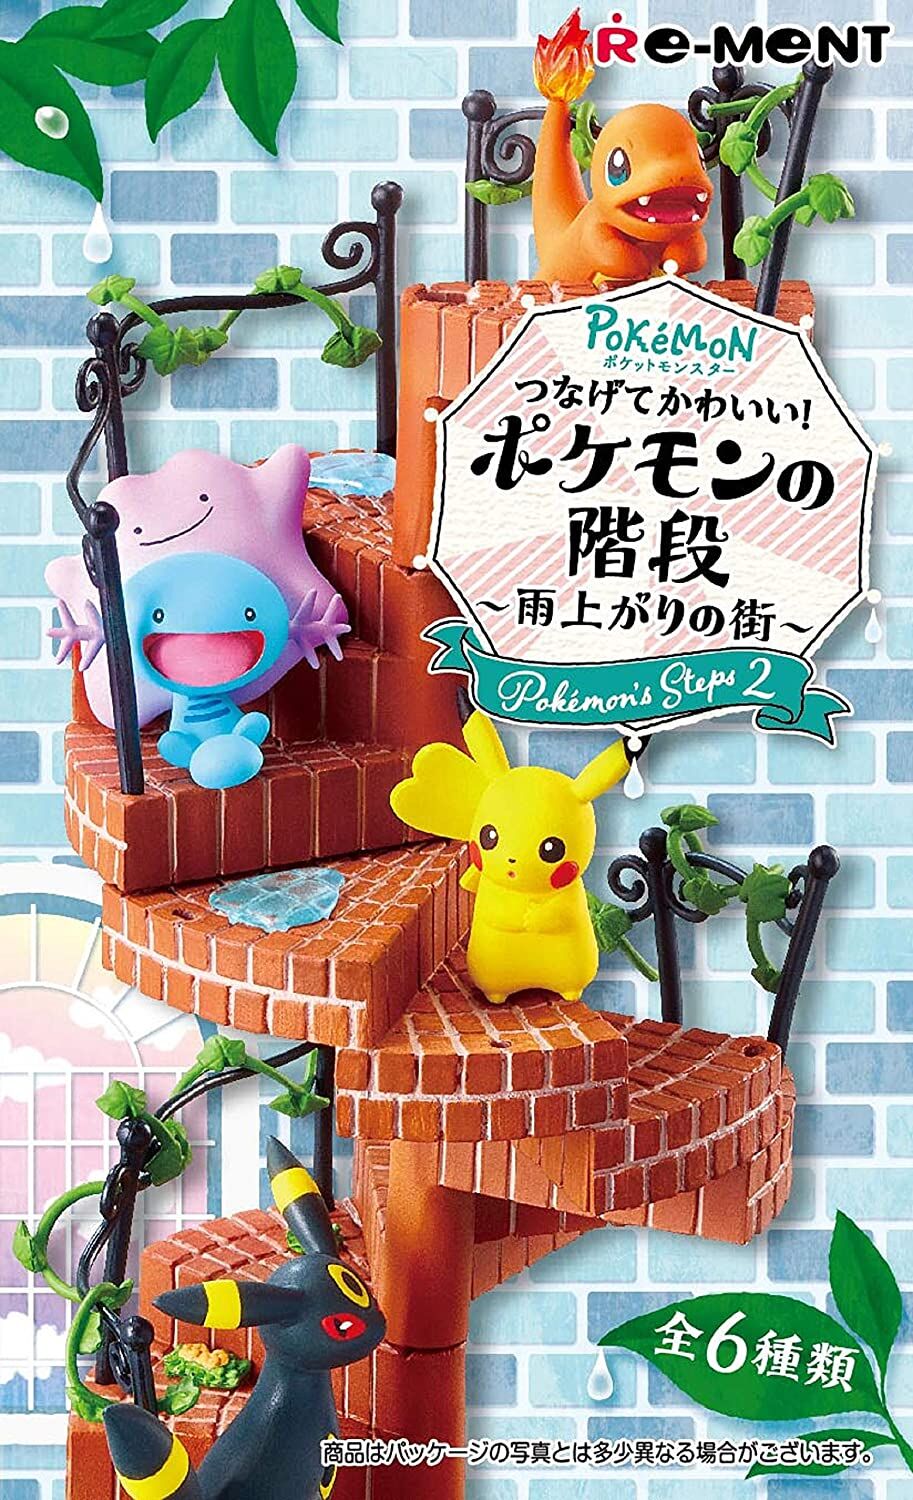 Re-Ment Pokemon Staircase Vol. 2 Complete Set (Box Set of 6)